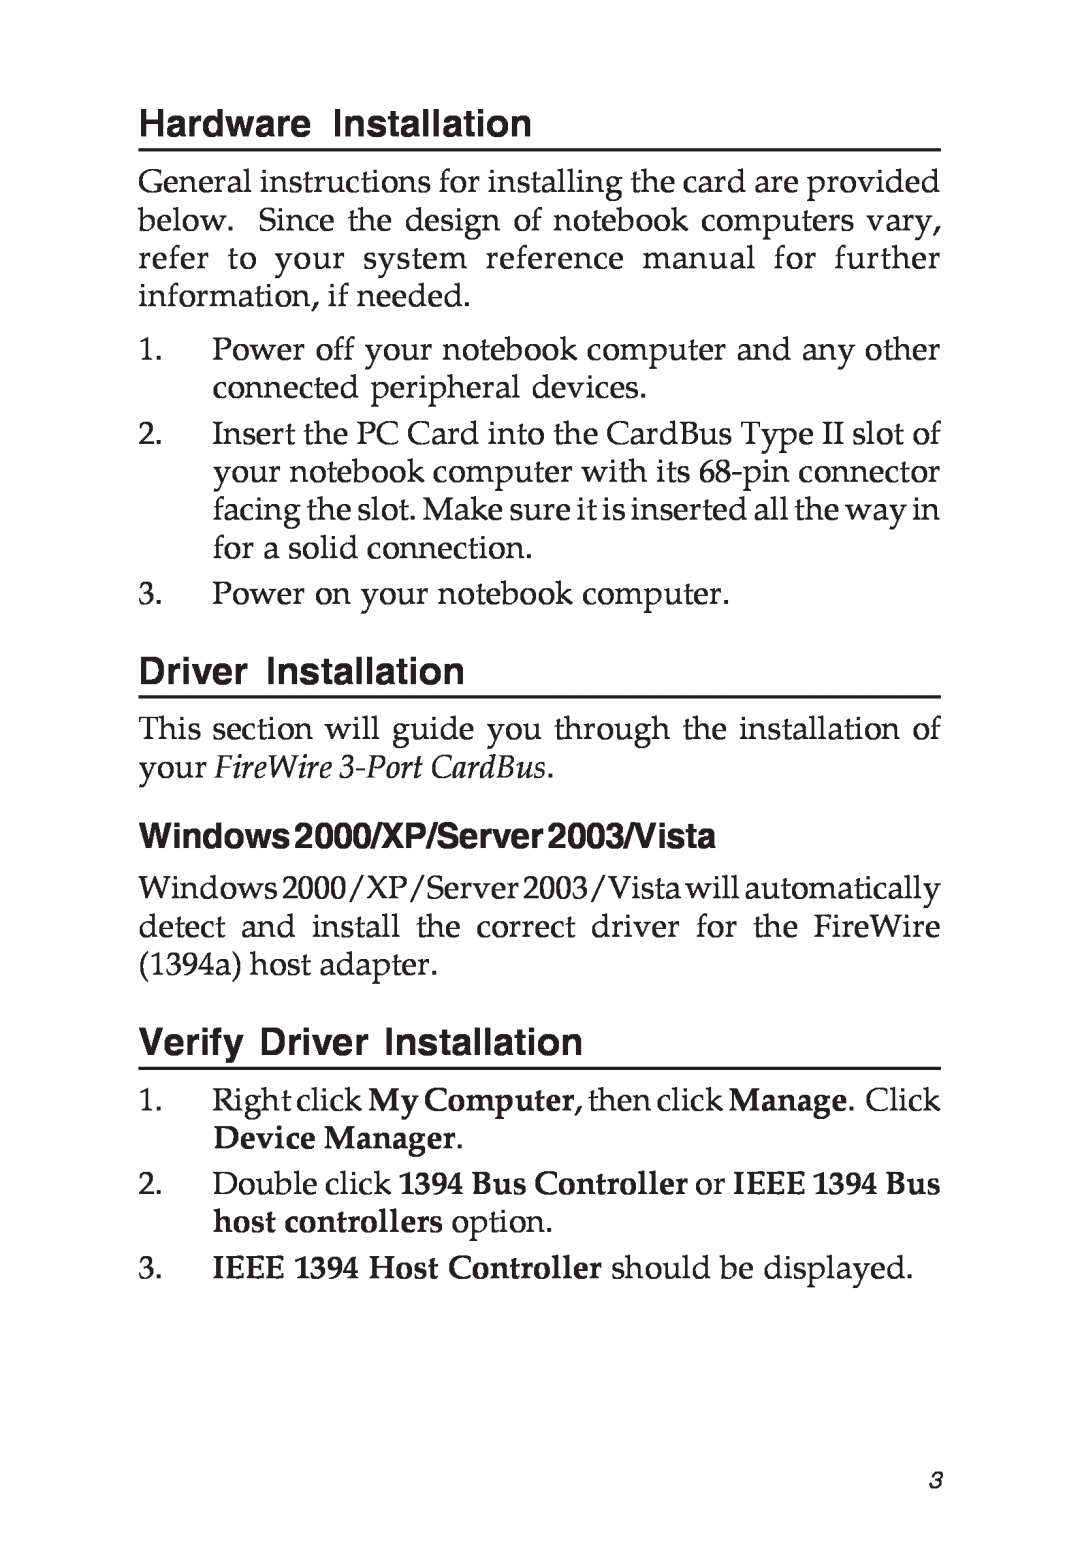 SIIG 04-0263E manual Hardware Installation, Verify Driver Installation, Windows2000/XP/Server2003/Vista 